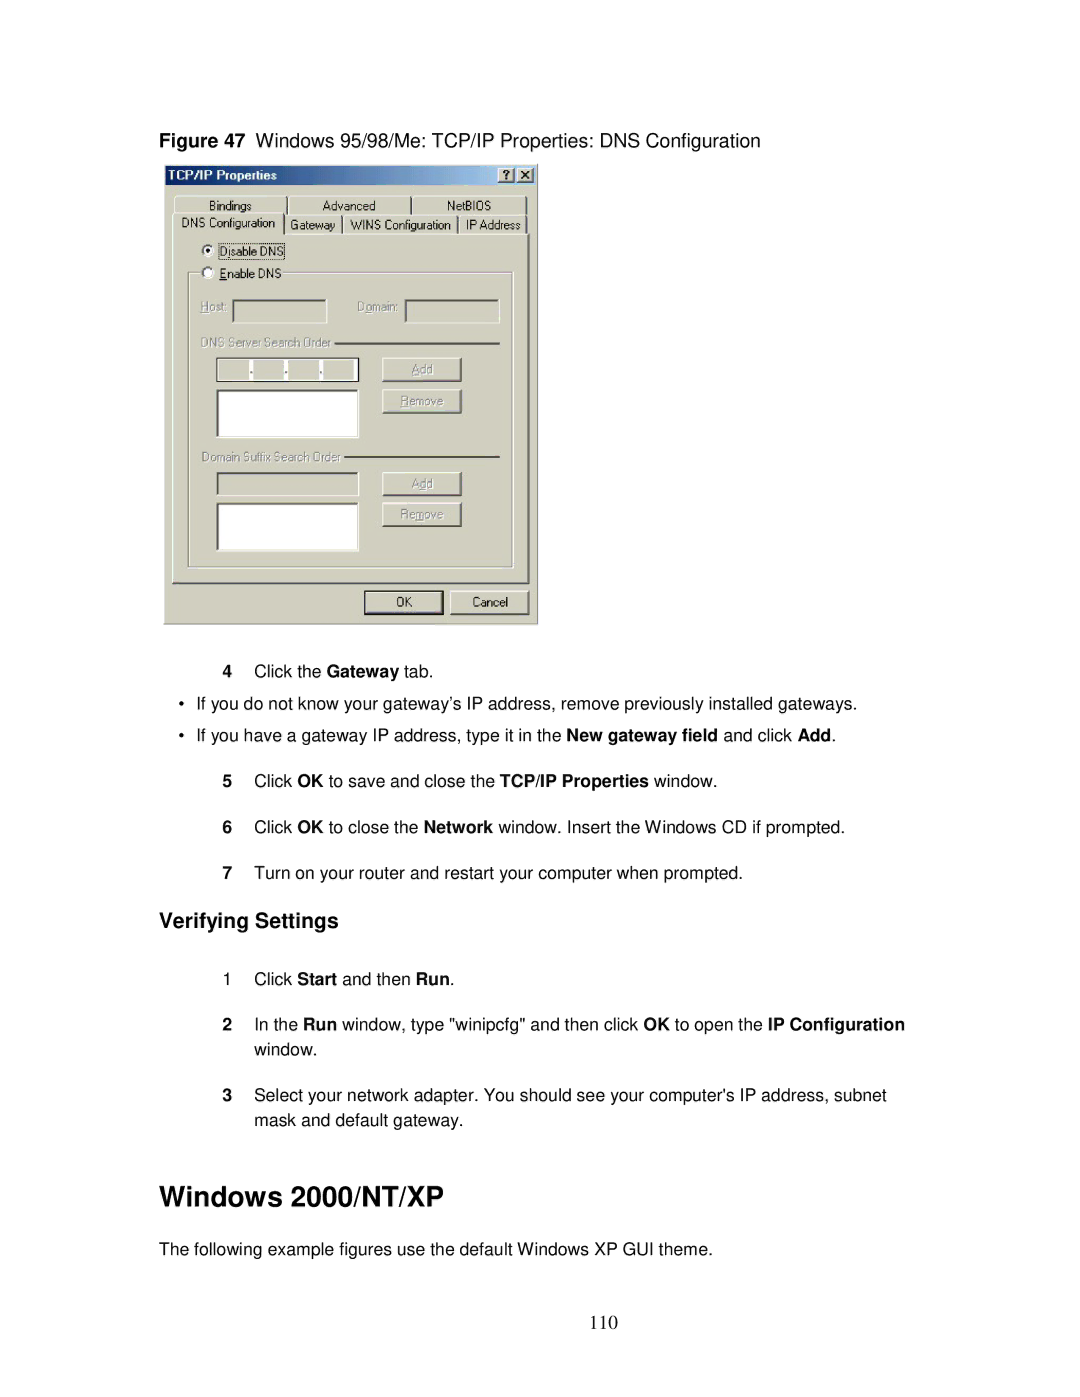 ZyXEL Communications MWR102 manual Windows 2000/NT/XP, Verifying Settings, 110 